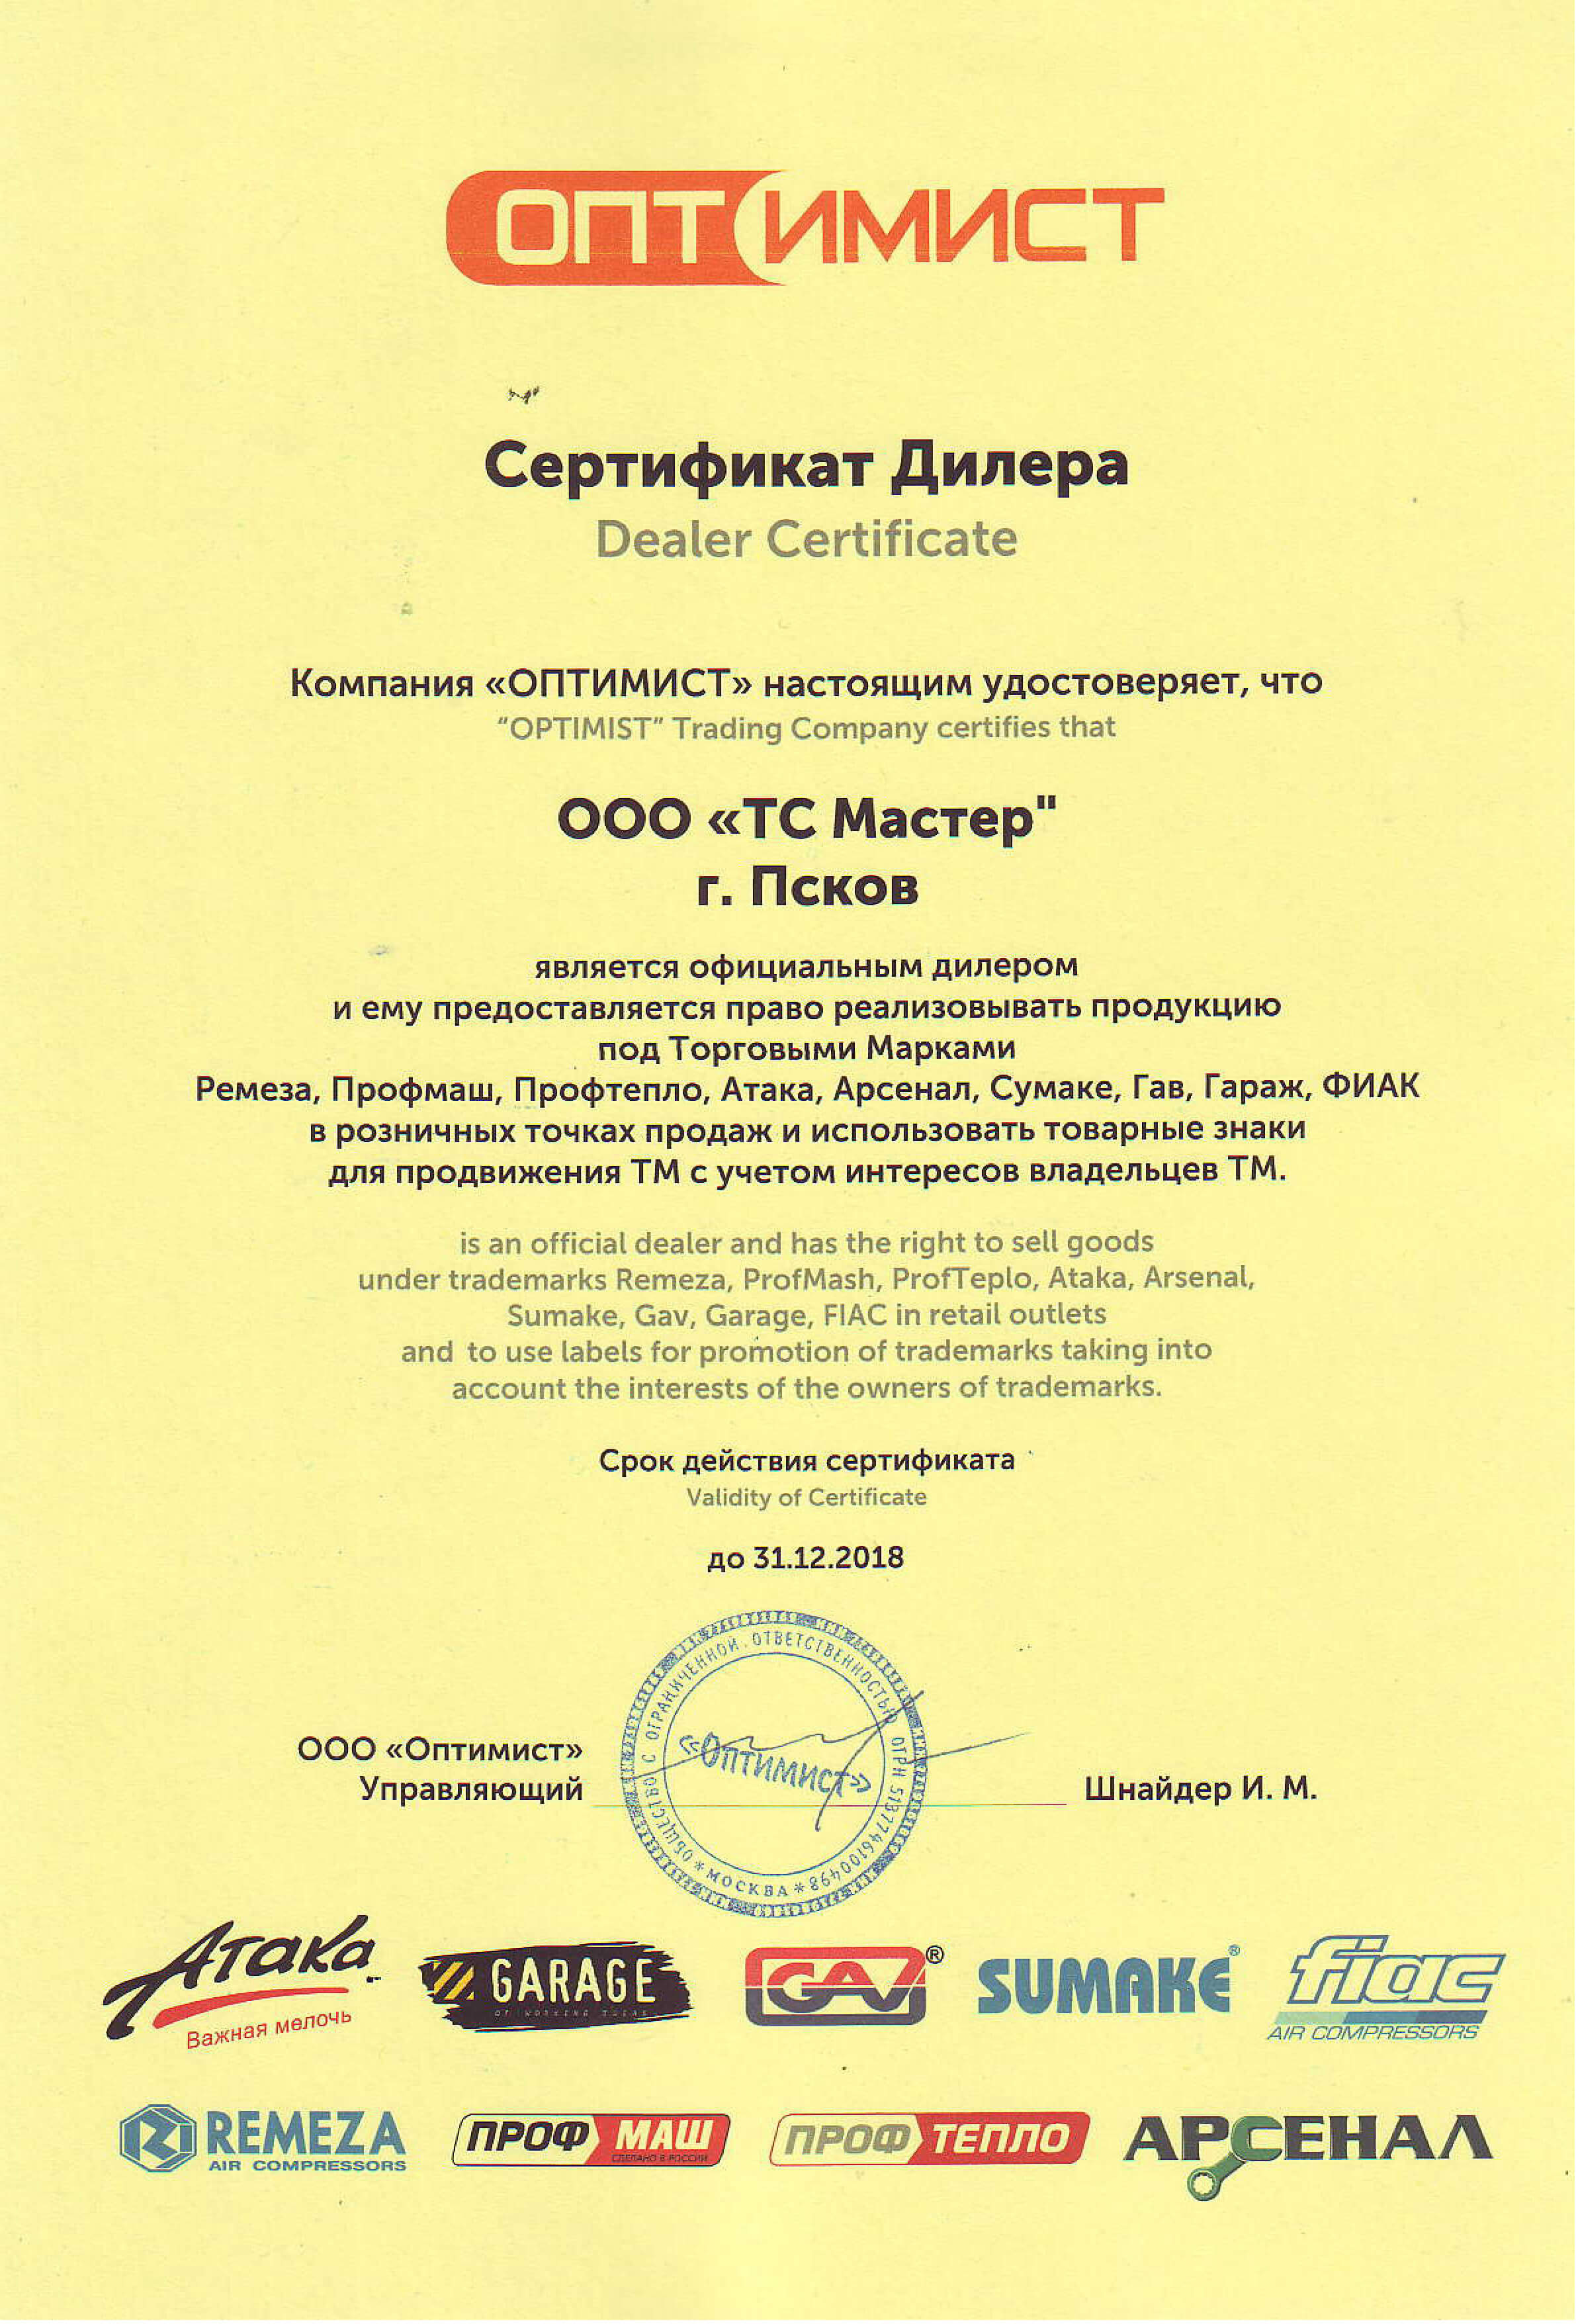 Сертификат дилера f6kZrwmQPK2K8wbYSb6M8m1seI2VeYcM.jpg